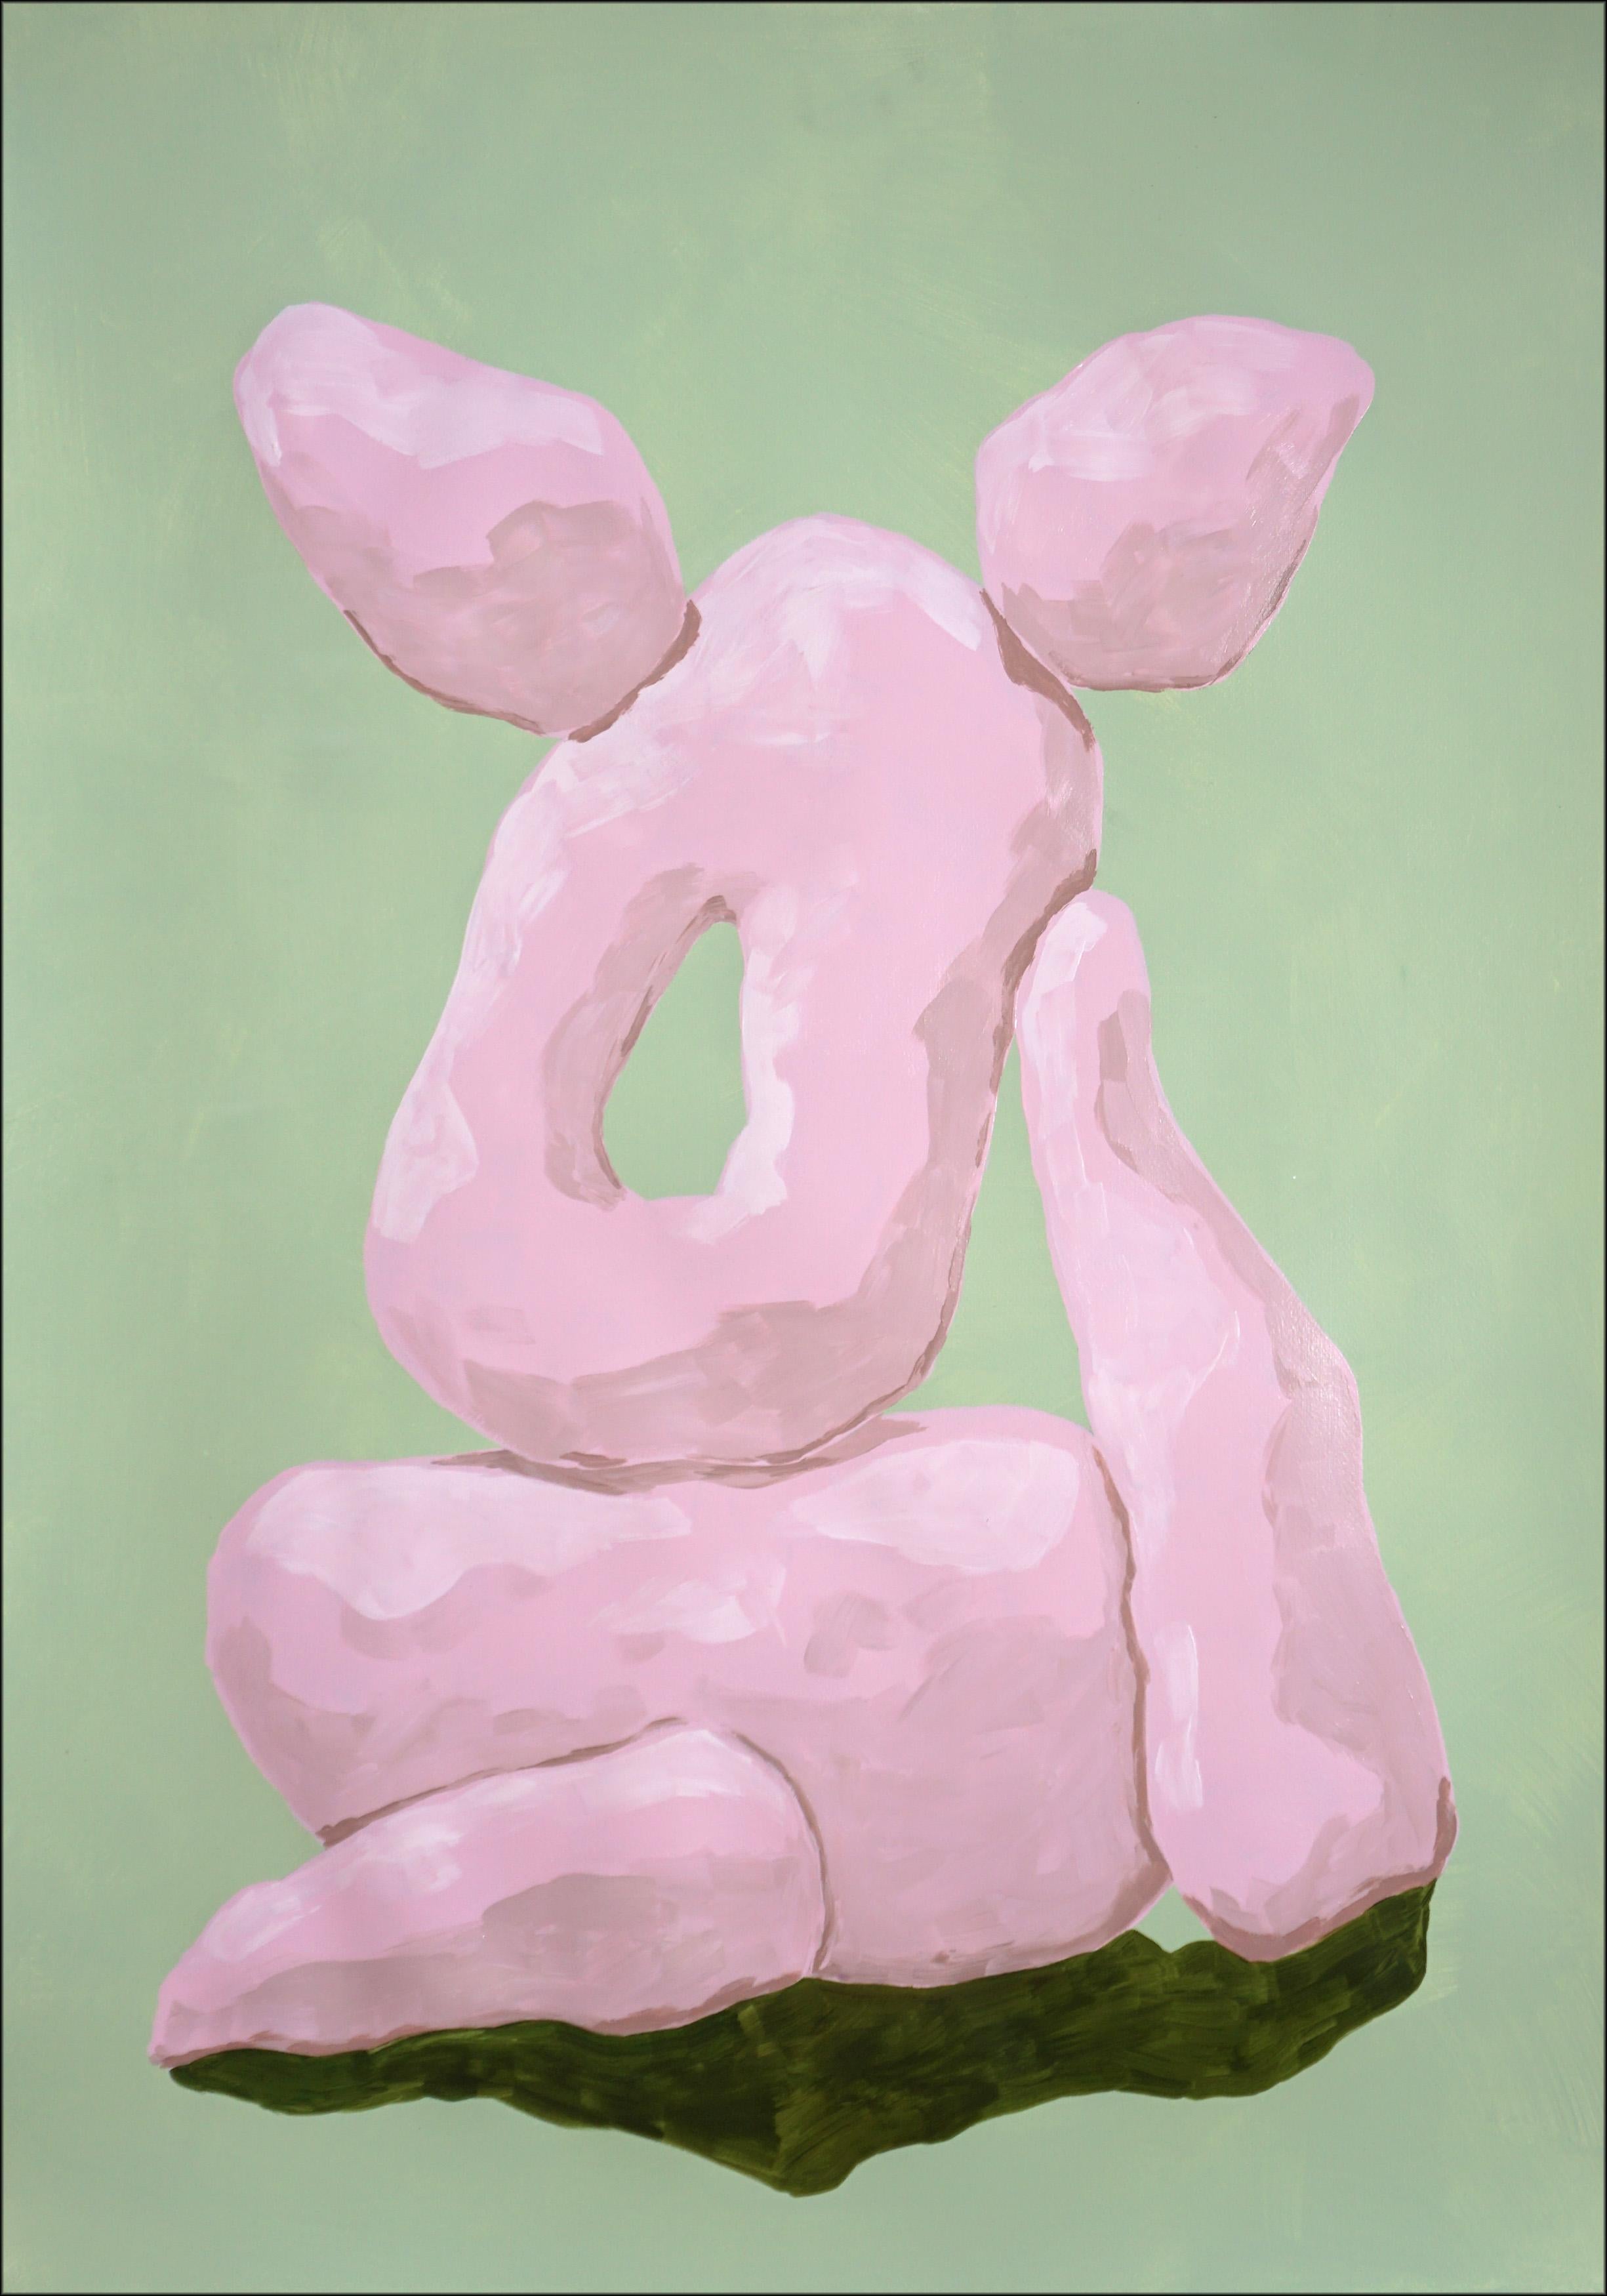 Ryan Rivadeneyra Abstract Painting - Pink Sculptures on Green, Organic Rocks, Pastel Tones, Garden Render Shapes